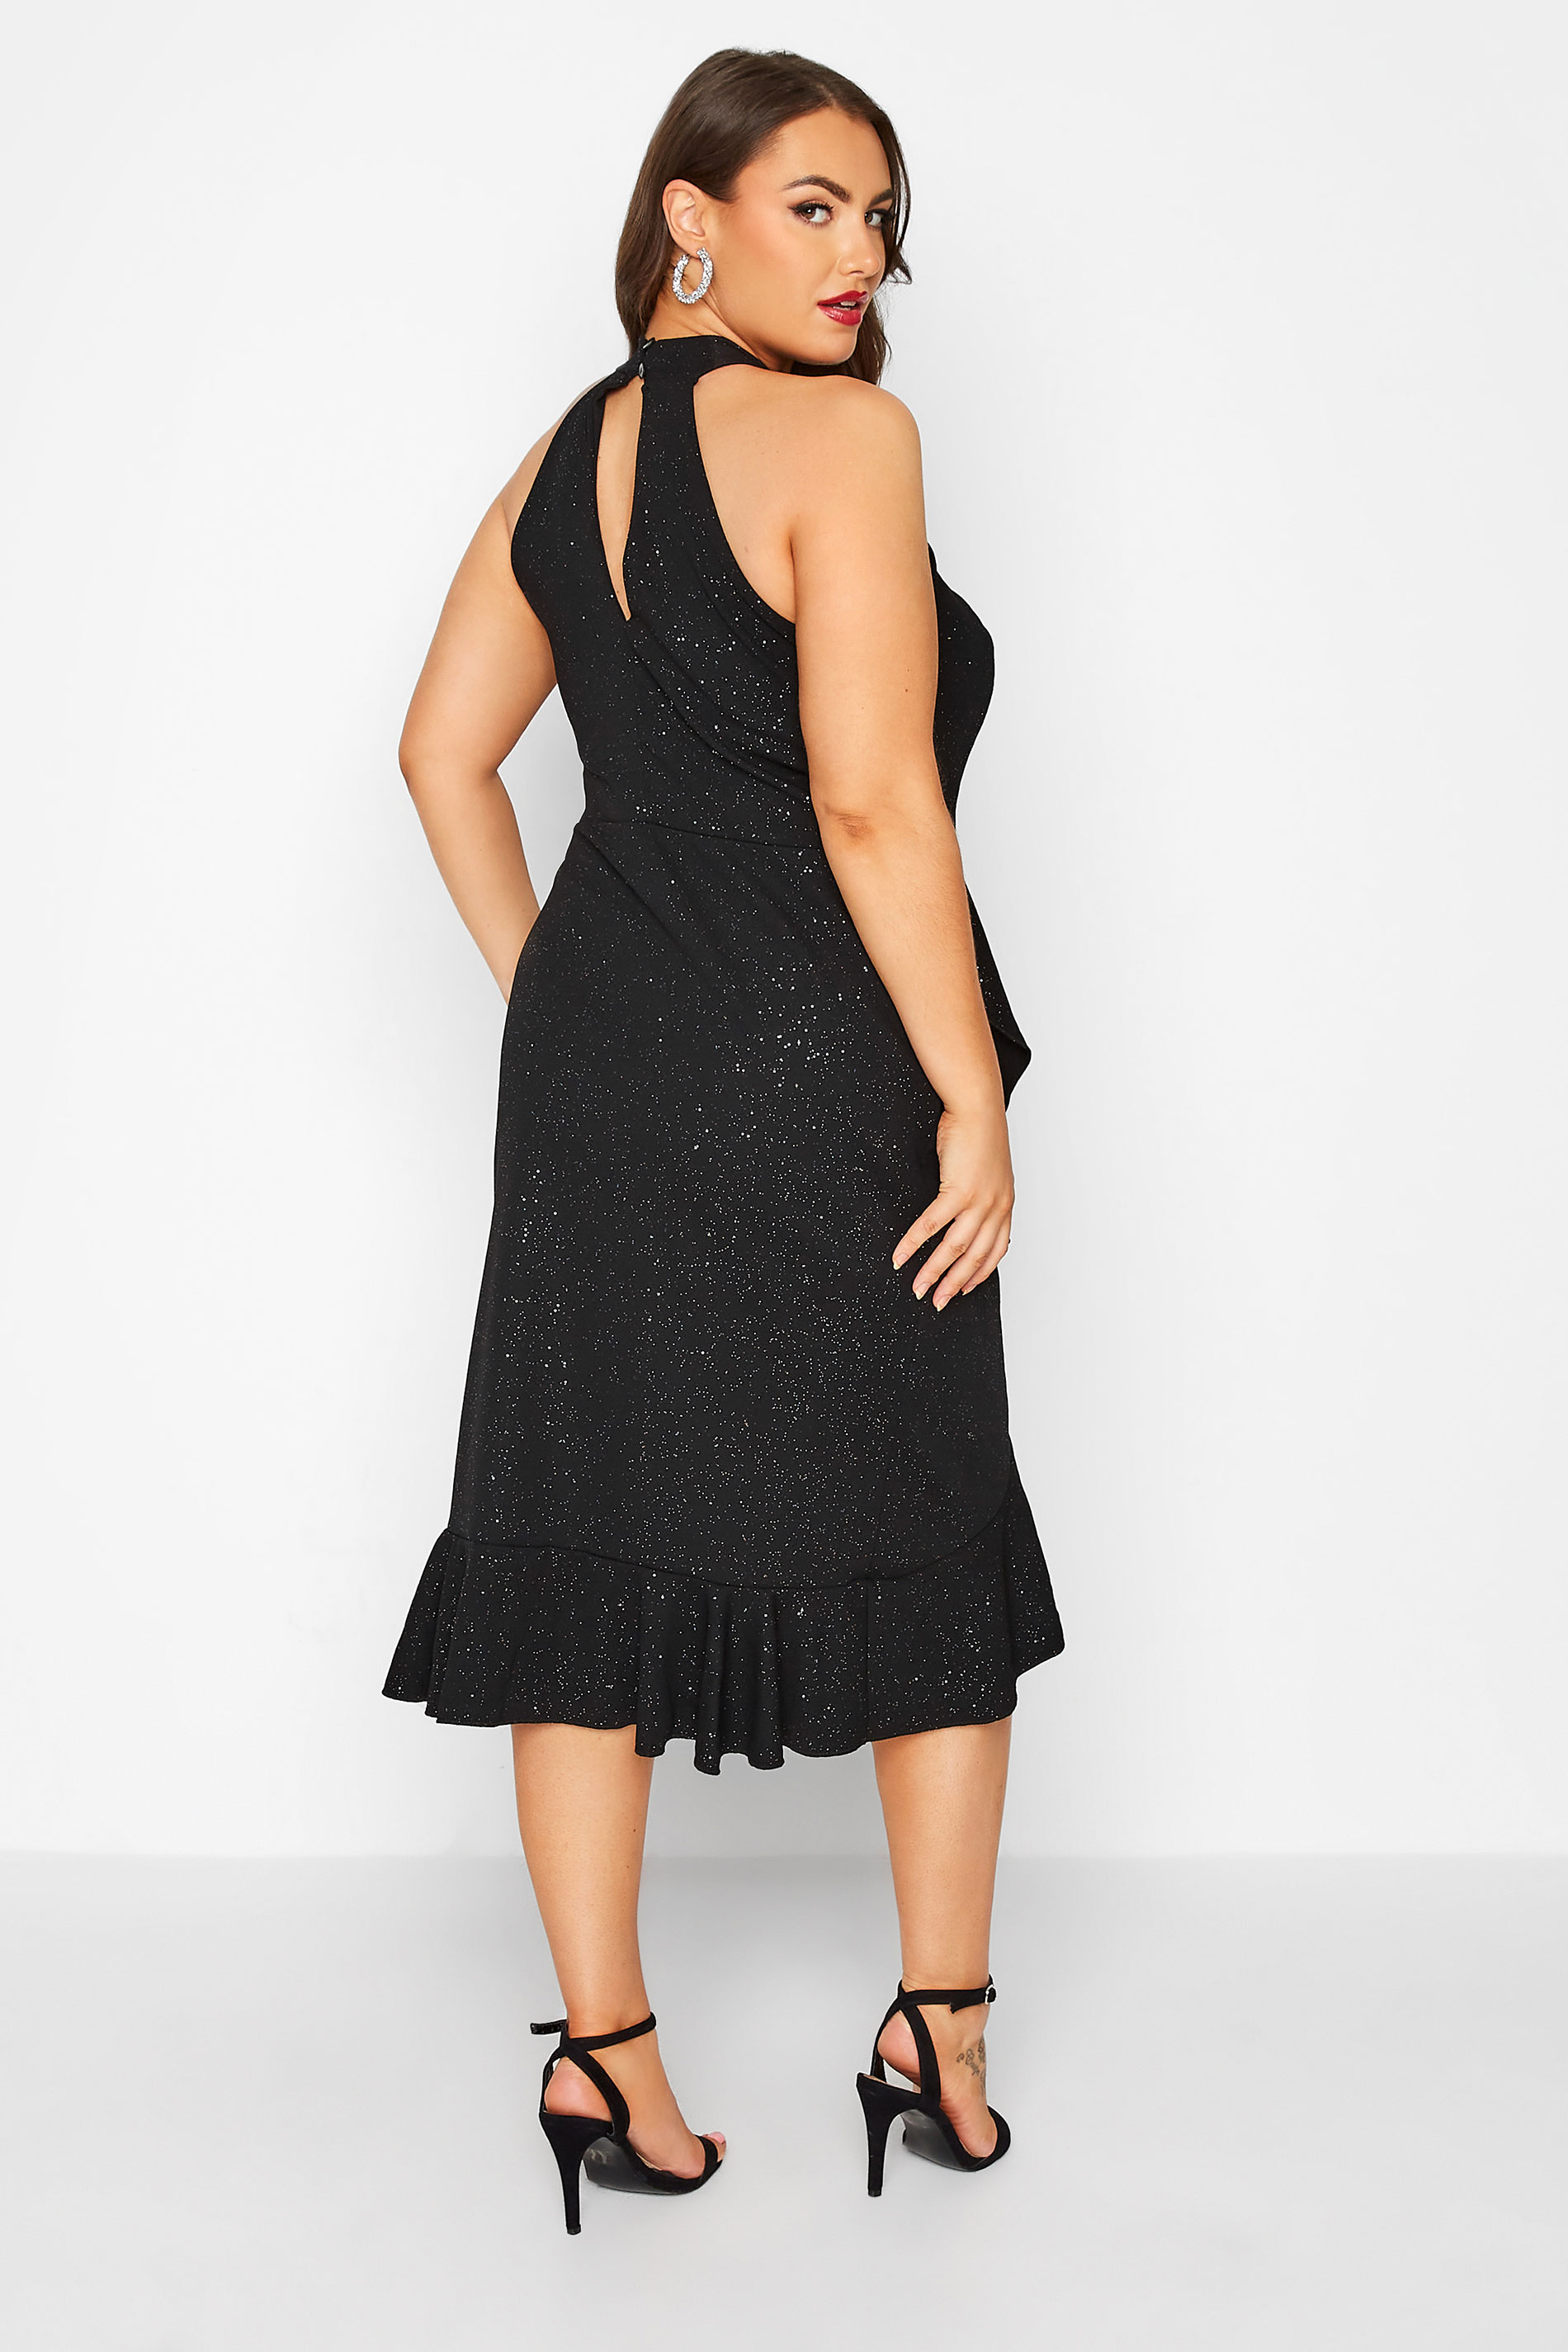 YOURS LONDON Plus Size Black Glitter Halter Neck Ruffle Wrap Dress | Yours Clothing 3